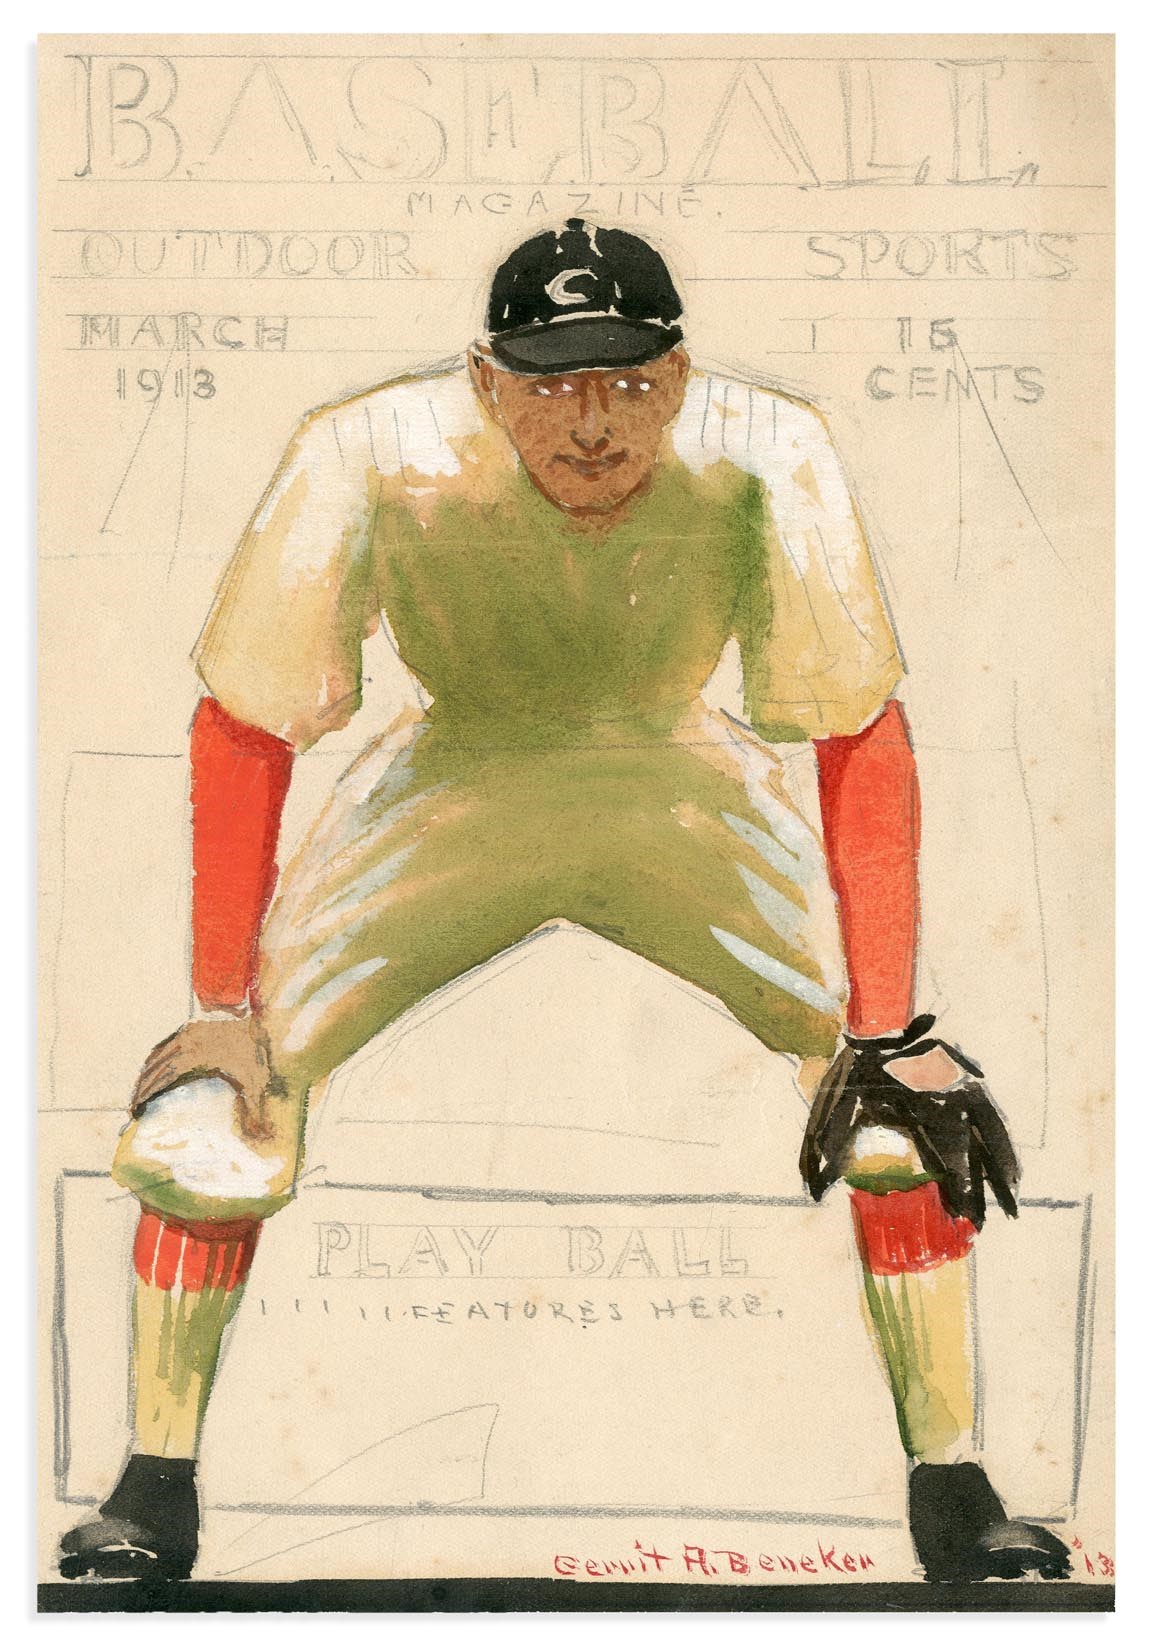 - "Ty Cobb" 1913 Baseball Magazine Cover Art Study by Gerrit Beneker (1882-1934)